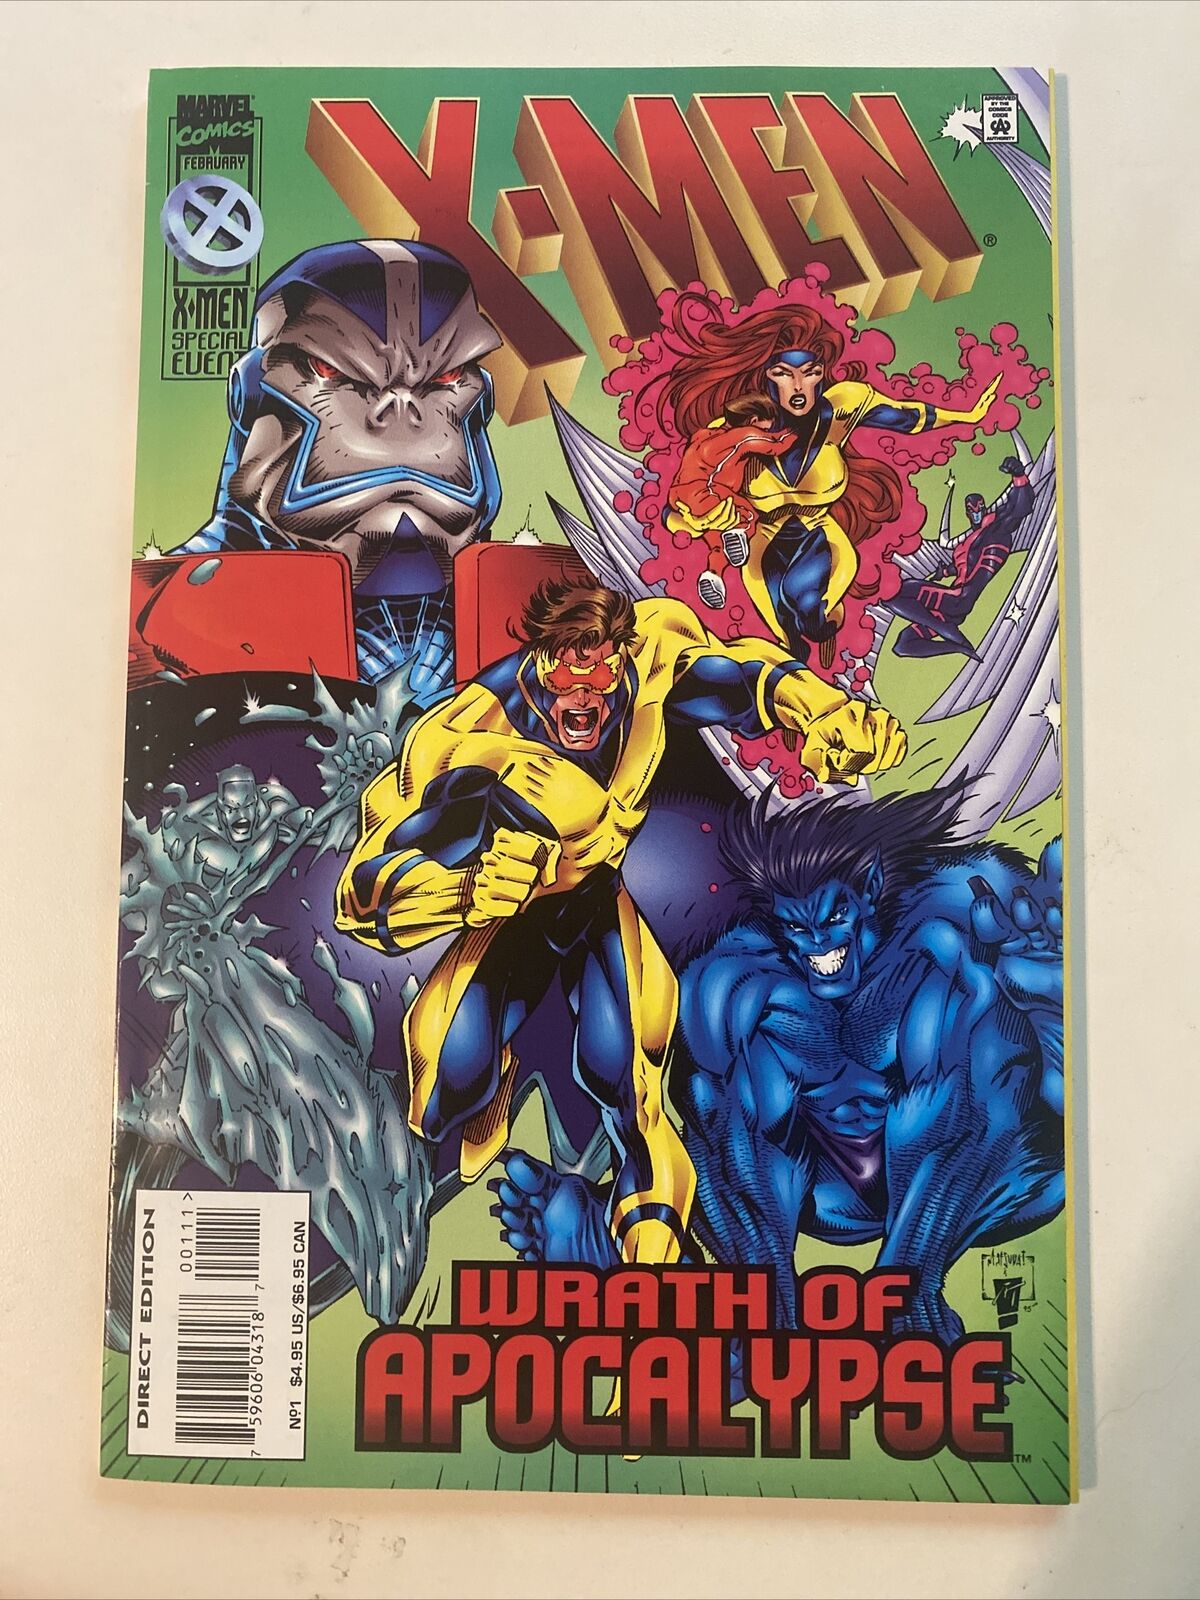 X-Men: Wrath of Apocalypse #1 collected edition